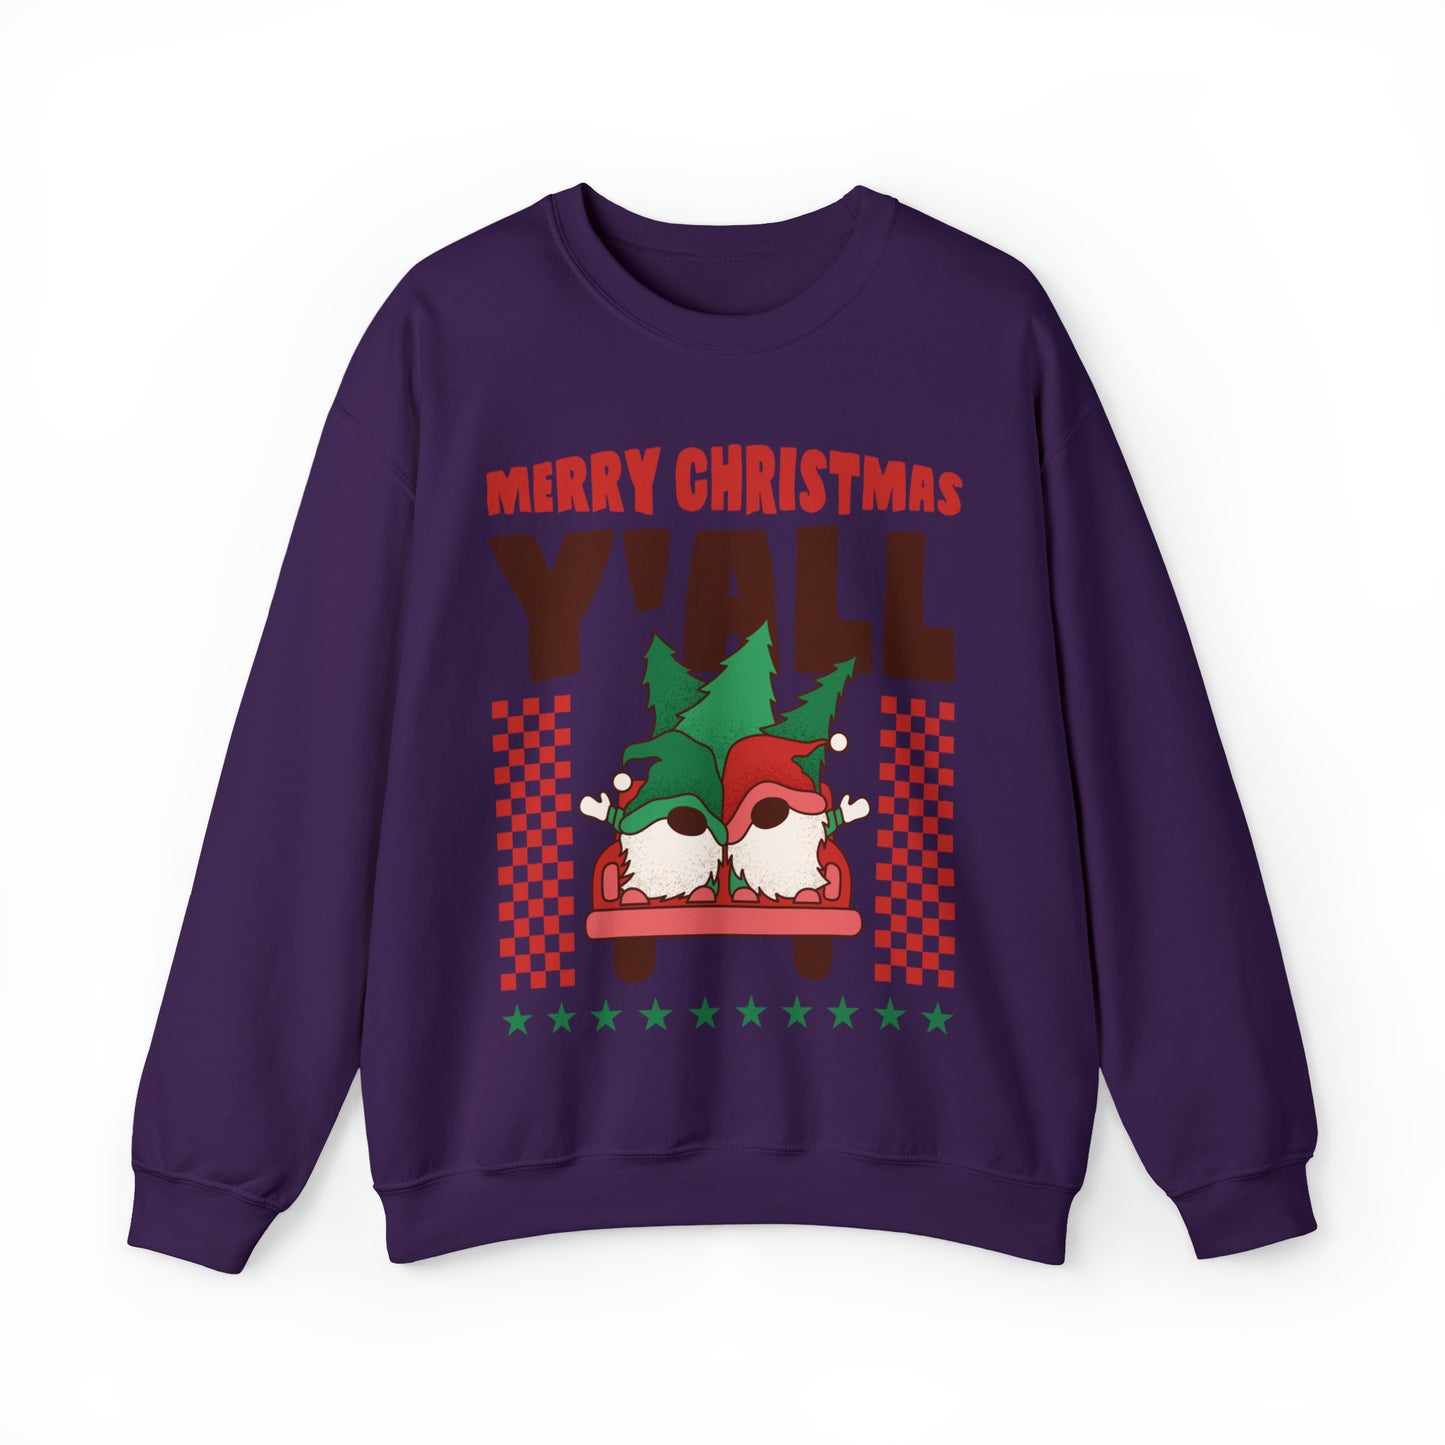 Merry Christmas Y'all Women's Christmas Crewneck Sweatshirt